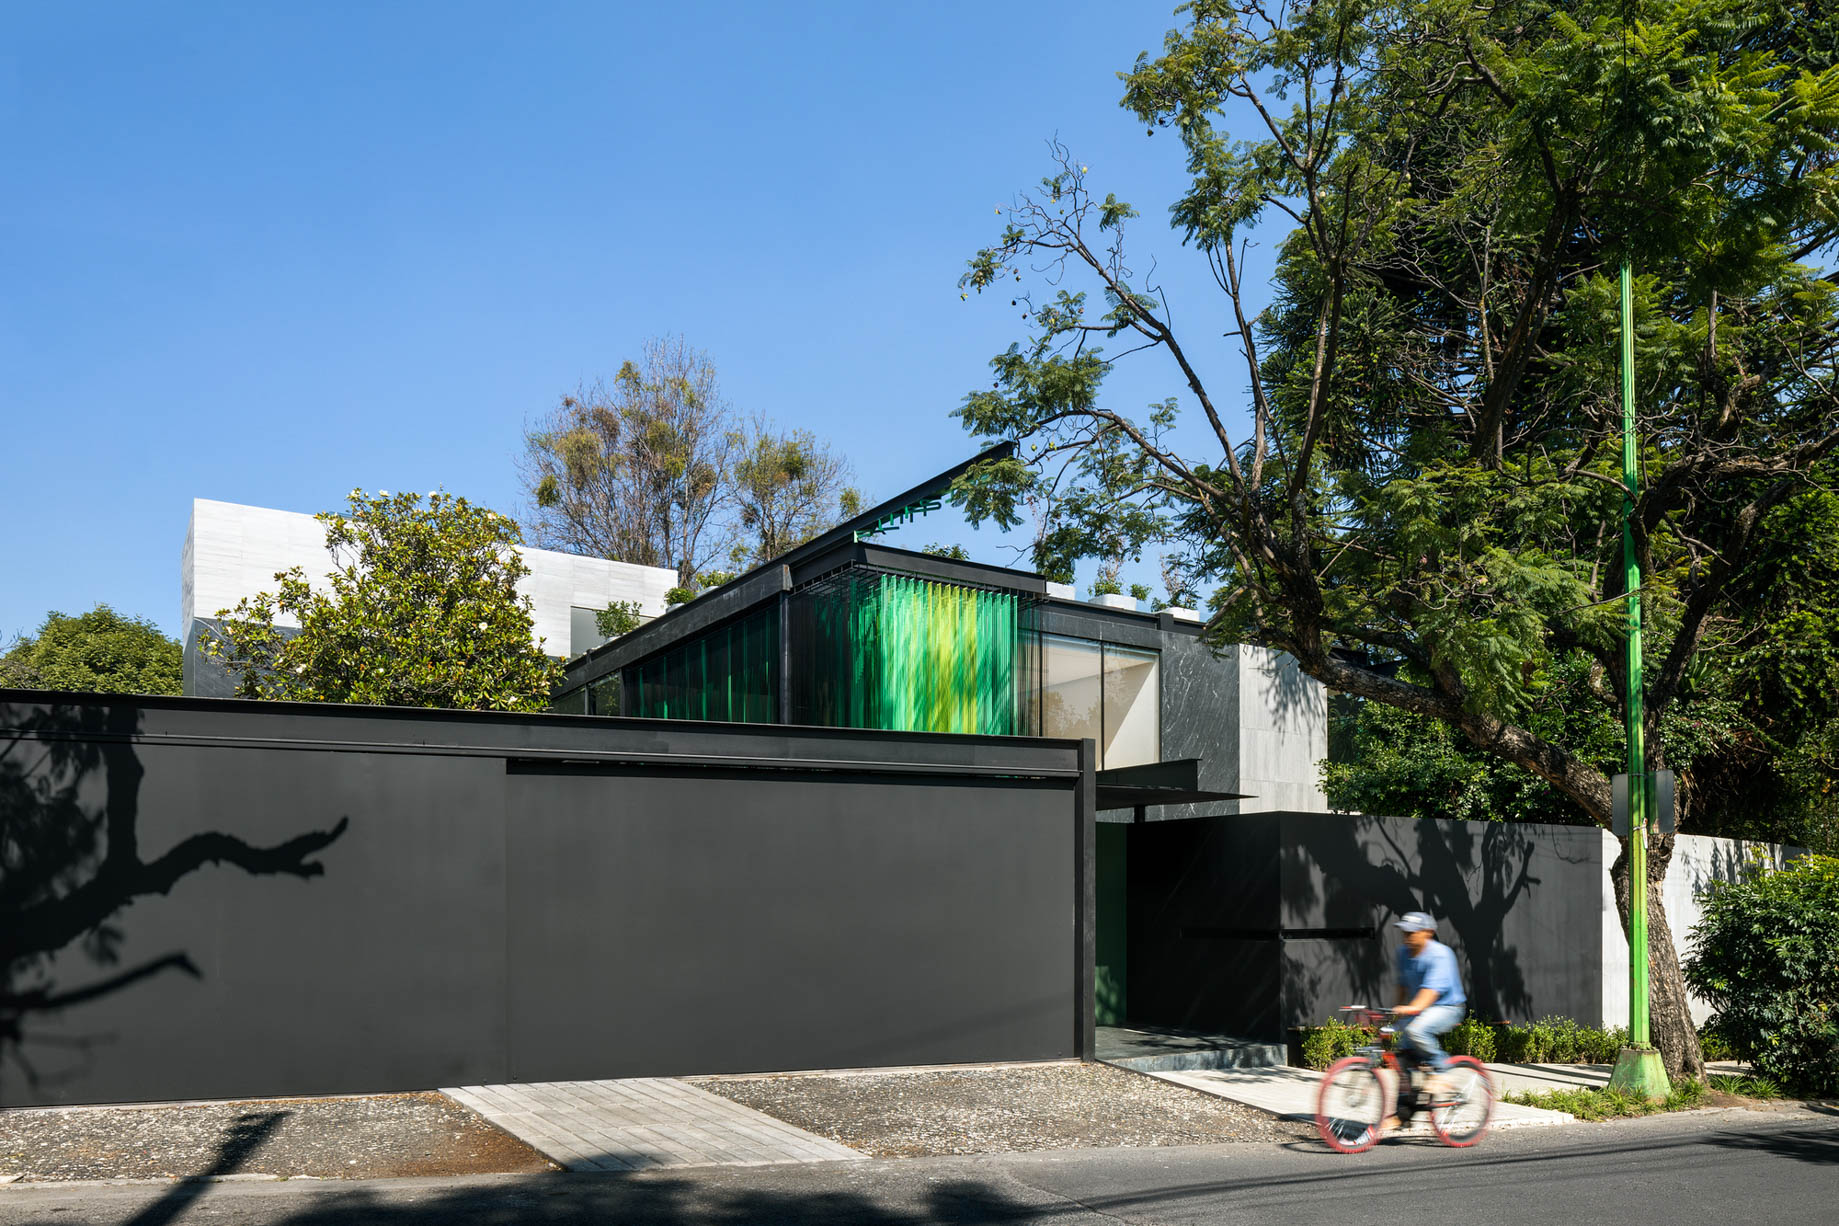 Casa VITR Modern Residential Studio House – Mexico City, Mexico